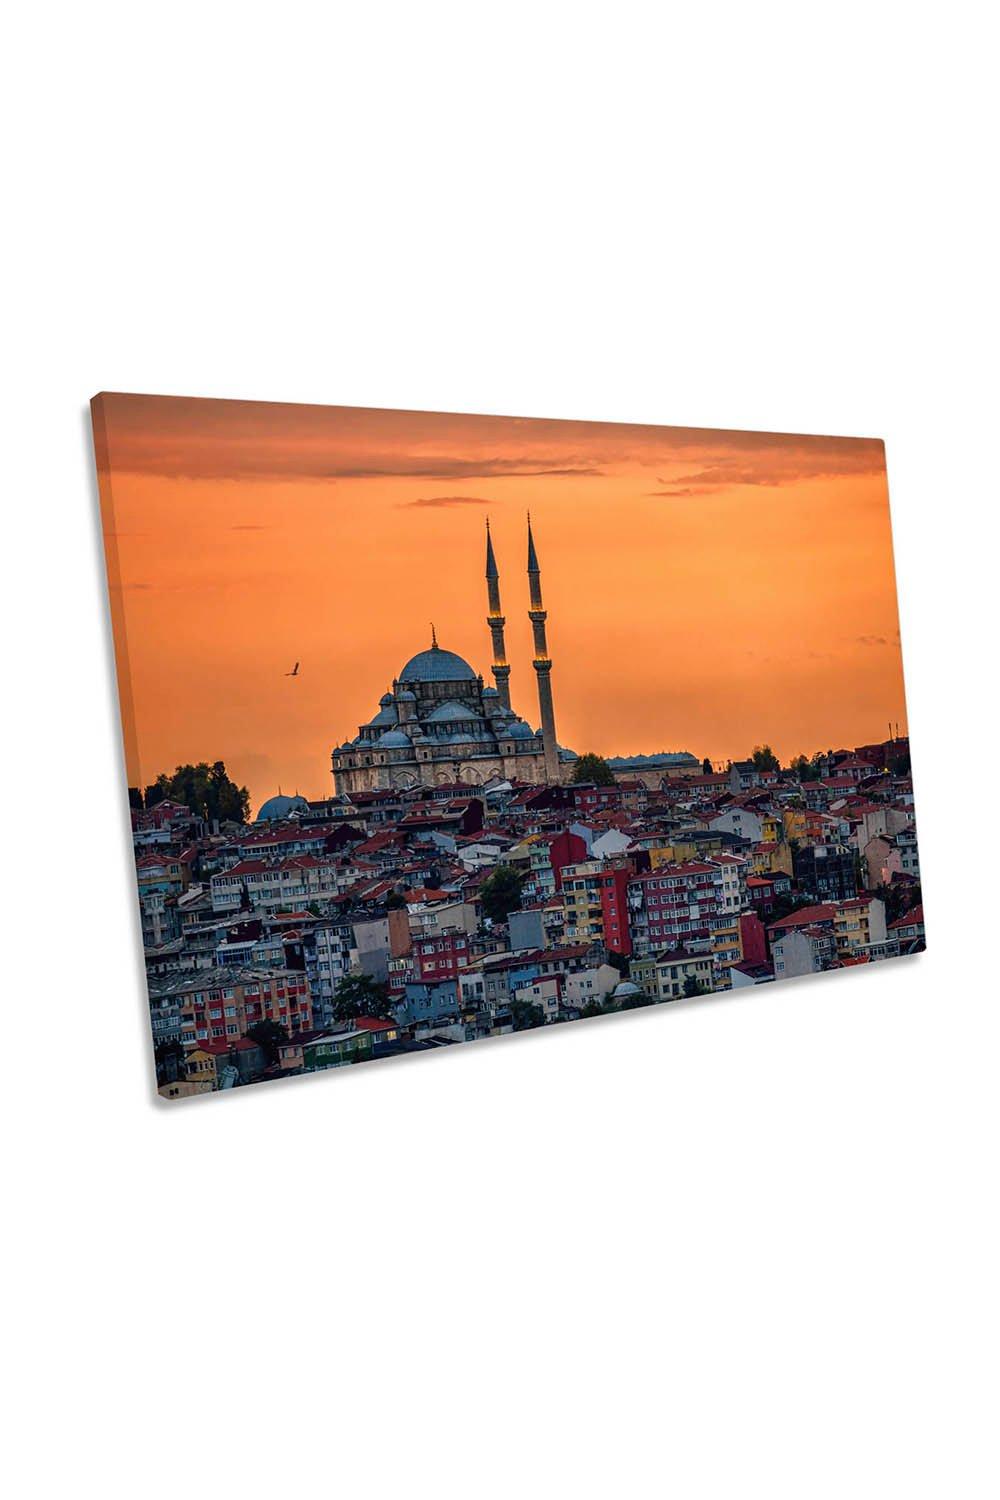 Yavuz Sultan Selim Mosque Orange Sunset Canvas Wall Art Picture Print